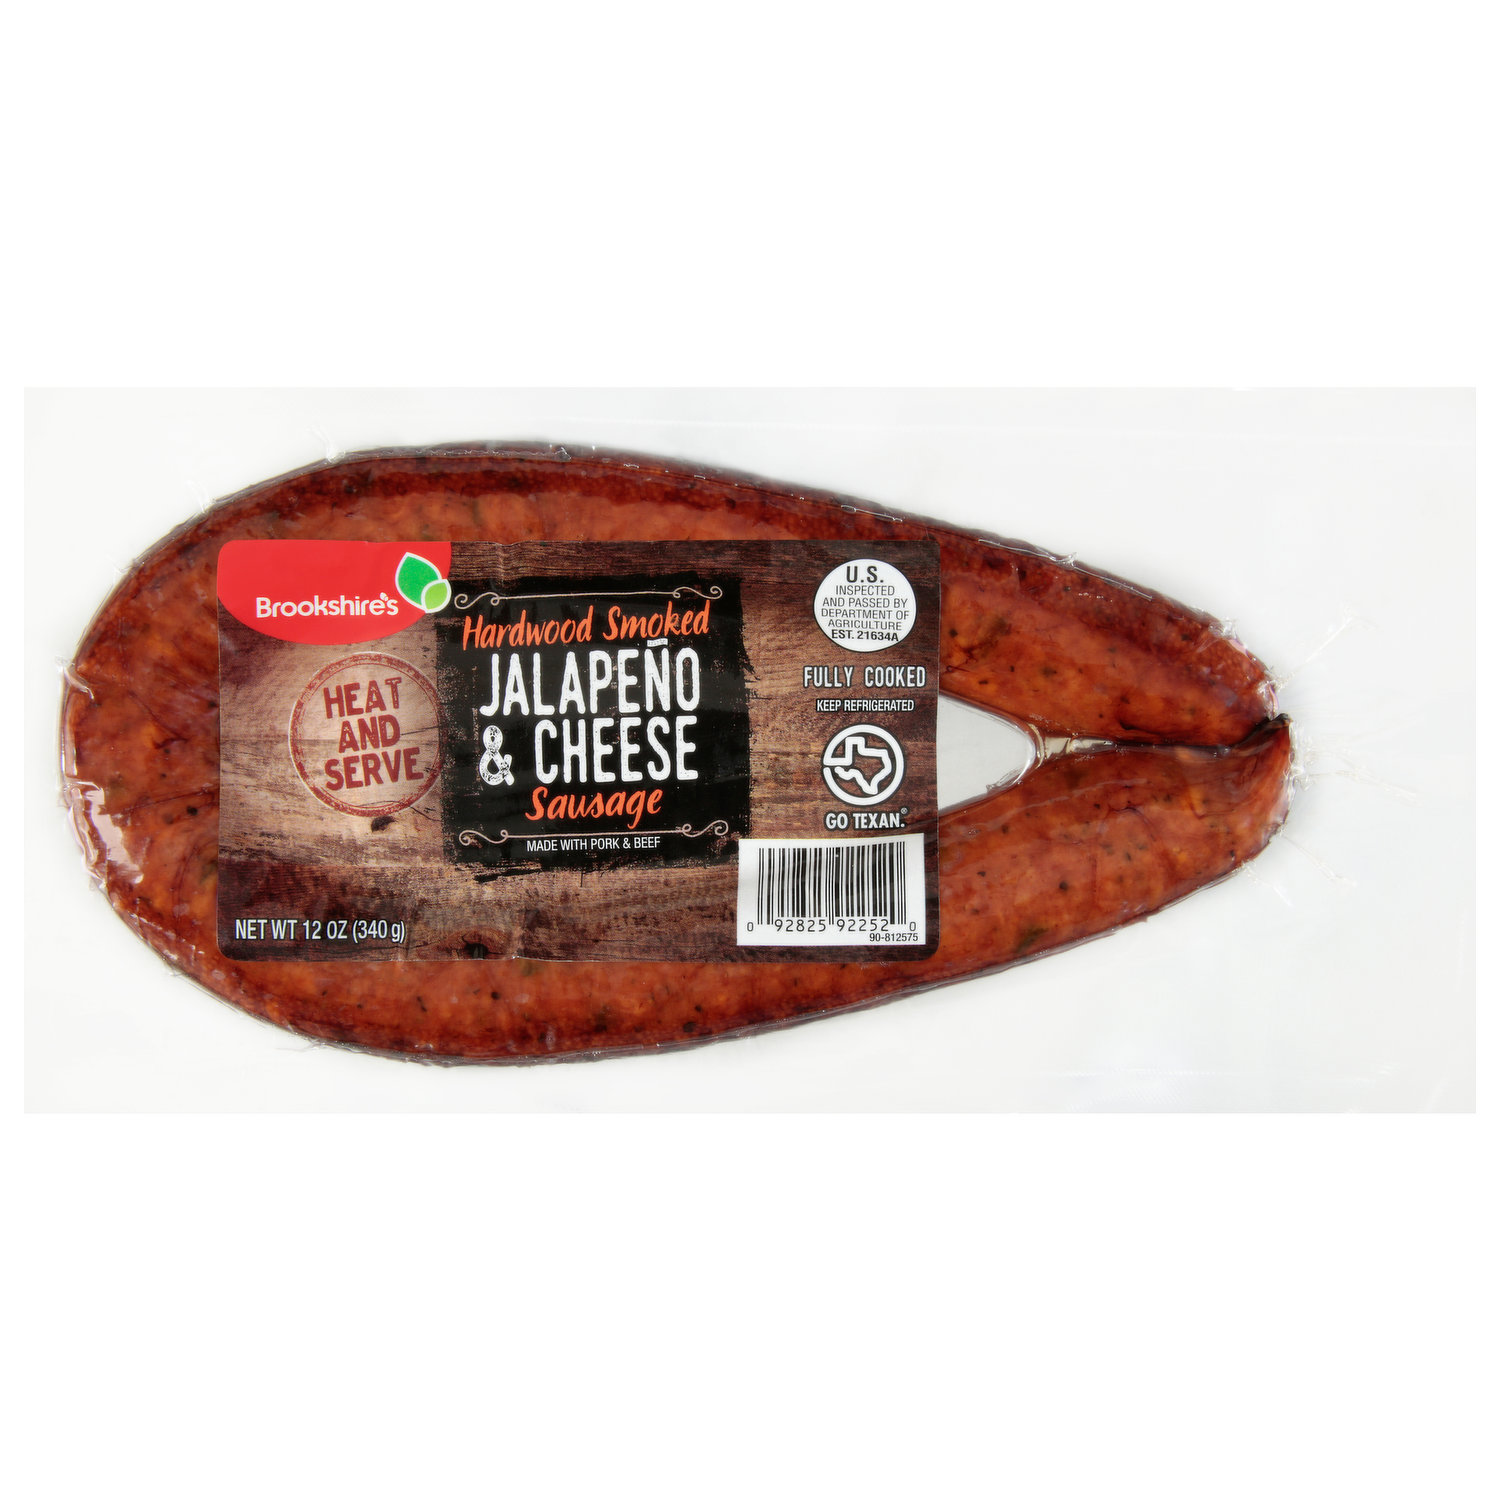 Down Home Hickory Smoked Pork Sausage - Hot 1.5 LB